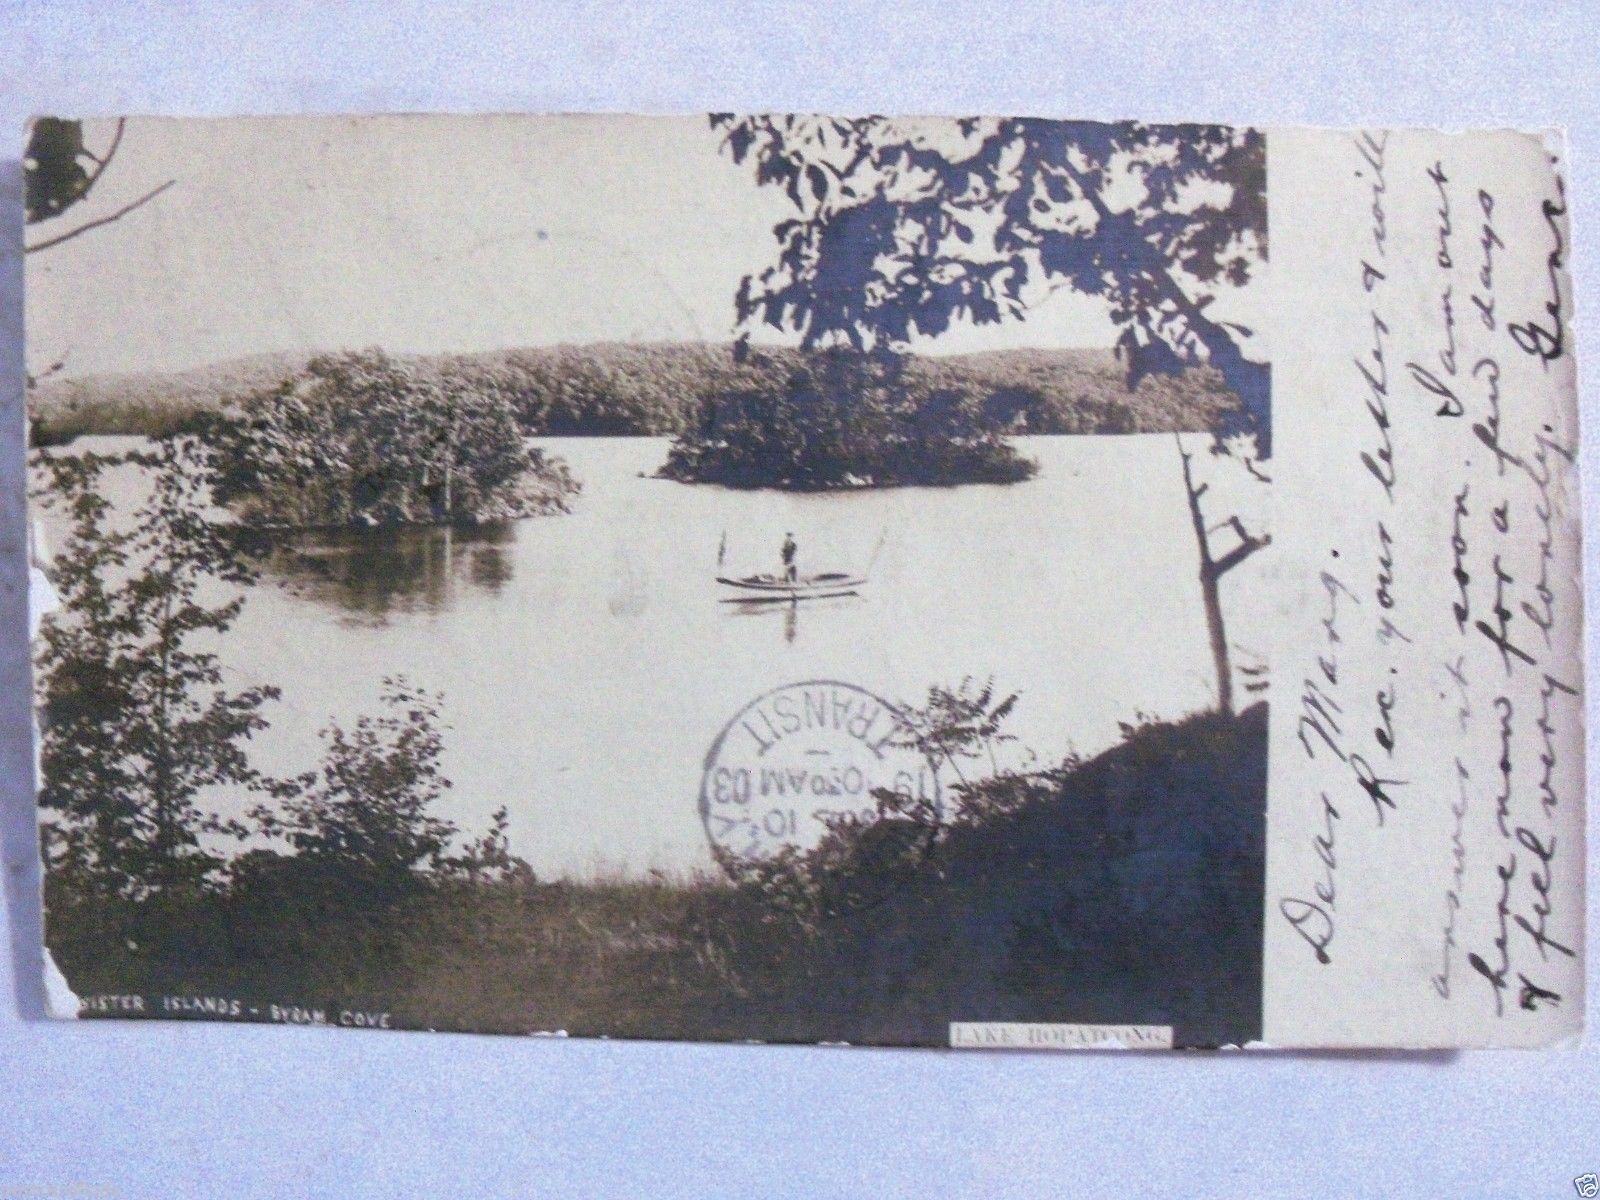 Lake Hopatcong - Byram Cove - Sister Islands - c 1910